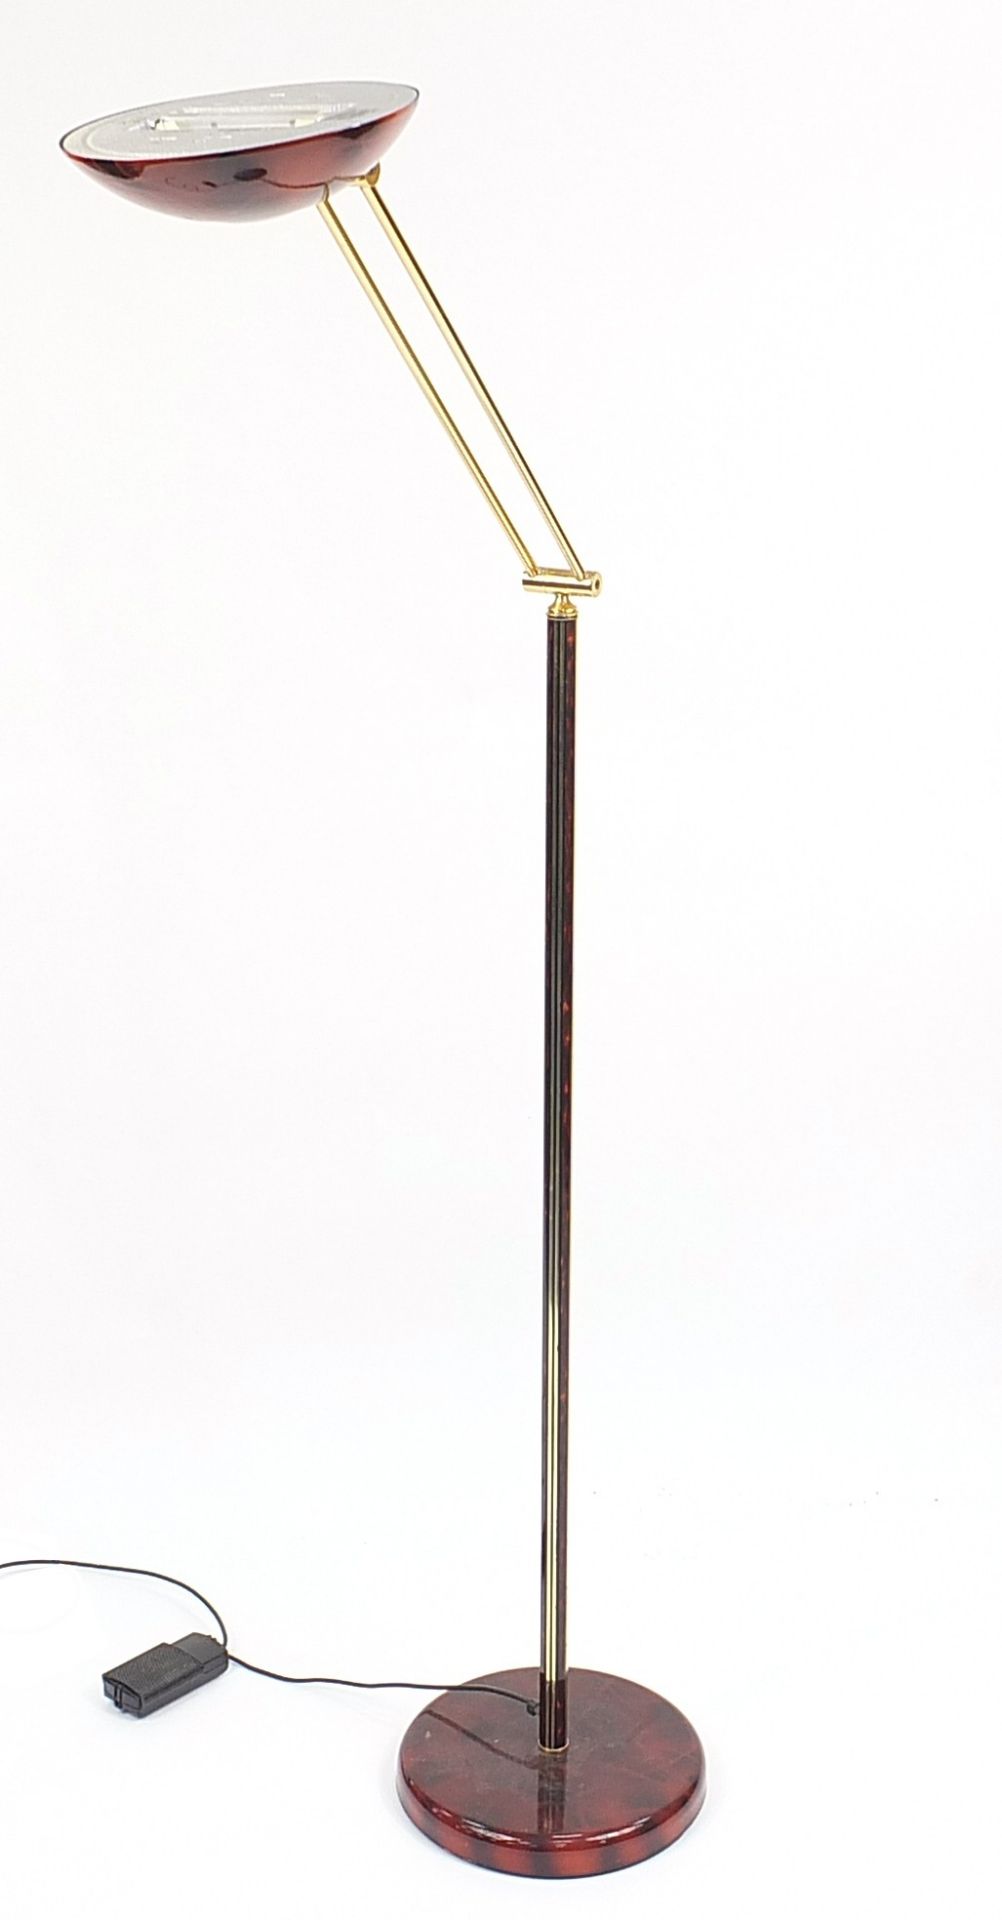 Faux tortoiseshell and brass adjustable standard lamp, 169cm high